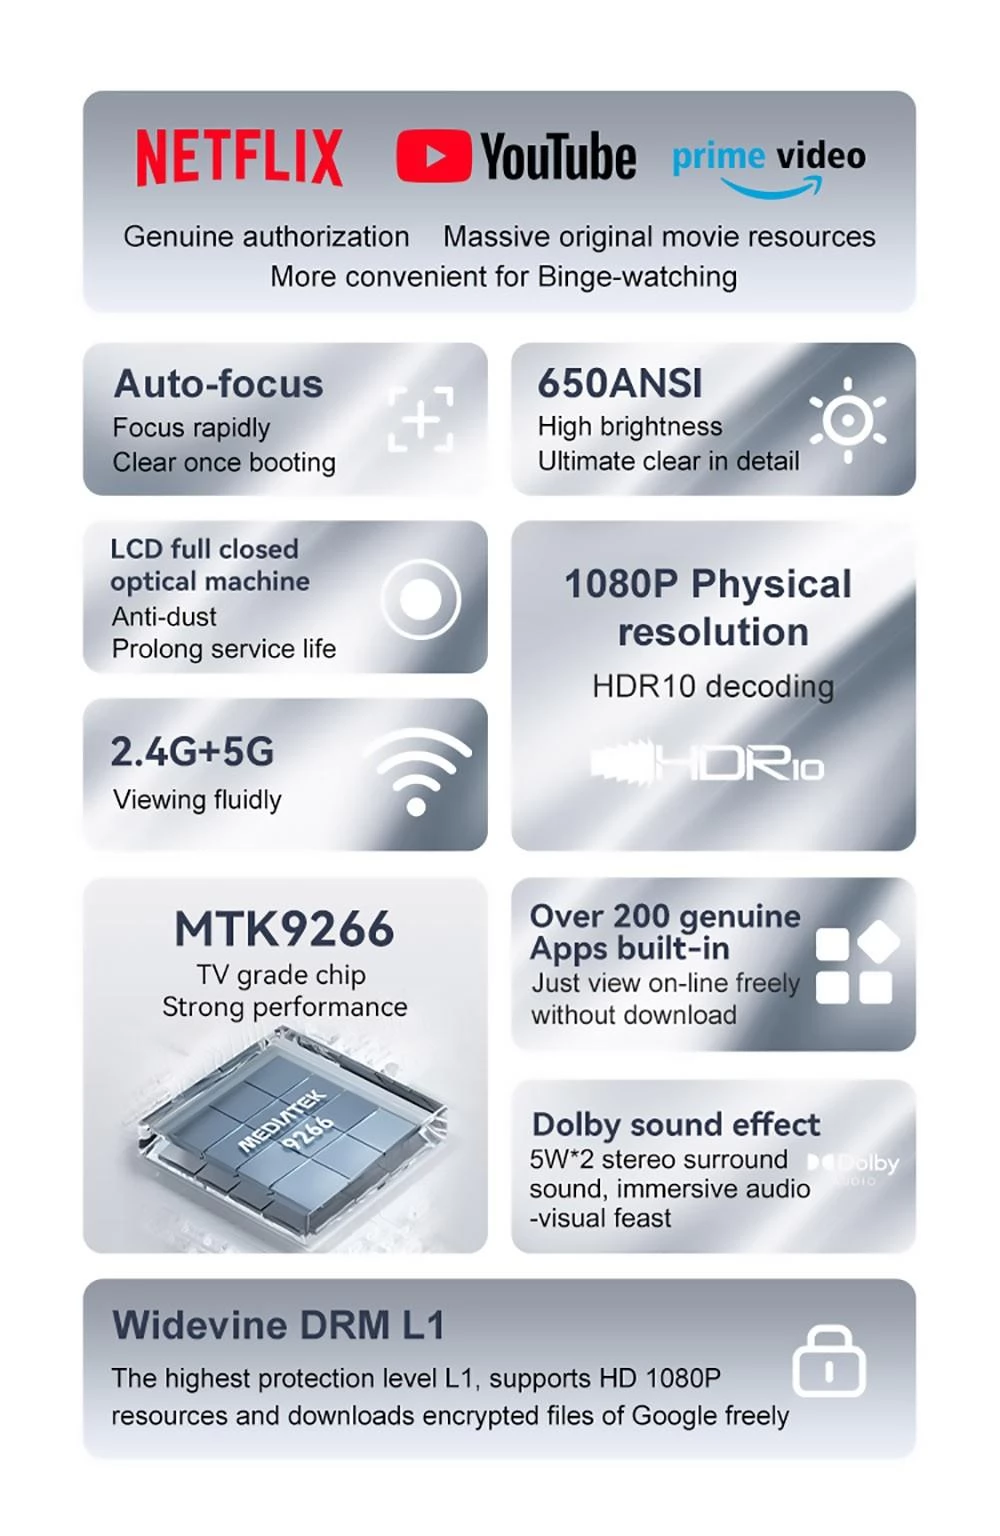 Wanbo TT LCD Projector, Autofocus, 1080P HDR, 650 ANSI, 2.4G, 1920*1080 fysieke resolutie, Laag geluidsniveau